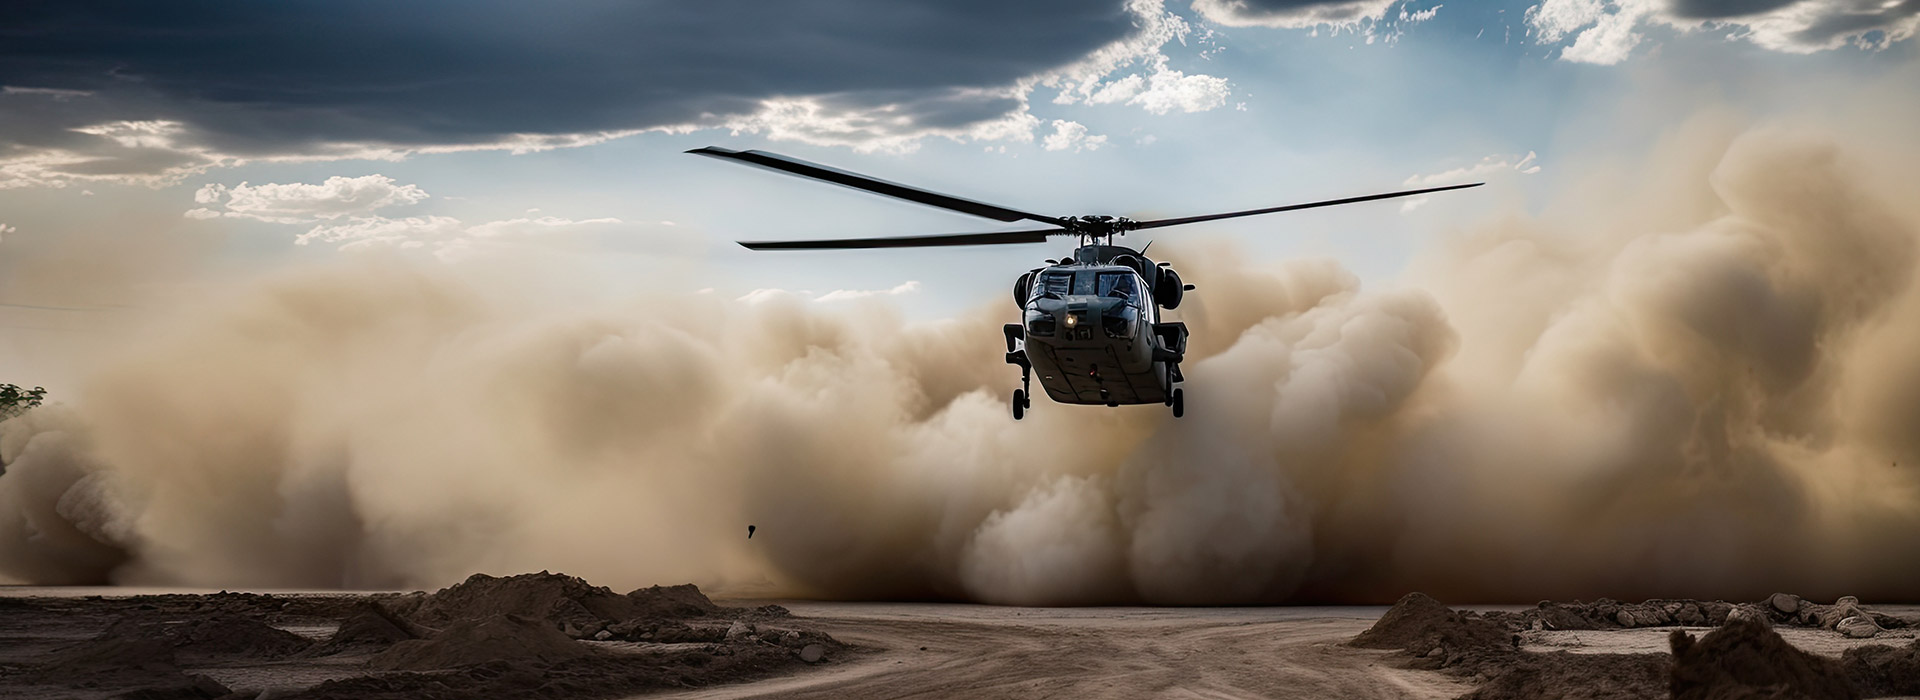 hero-defense-helicopter-dust-AdobeStock_587112989